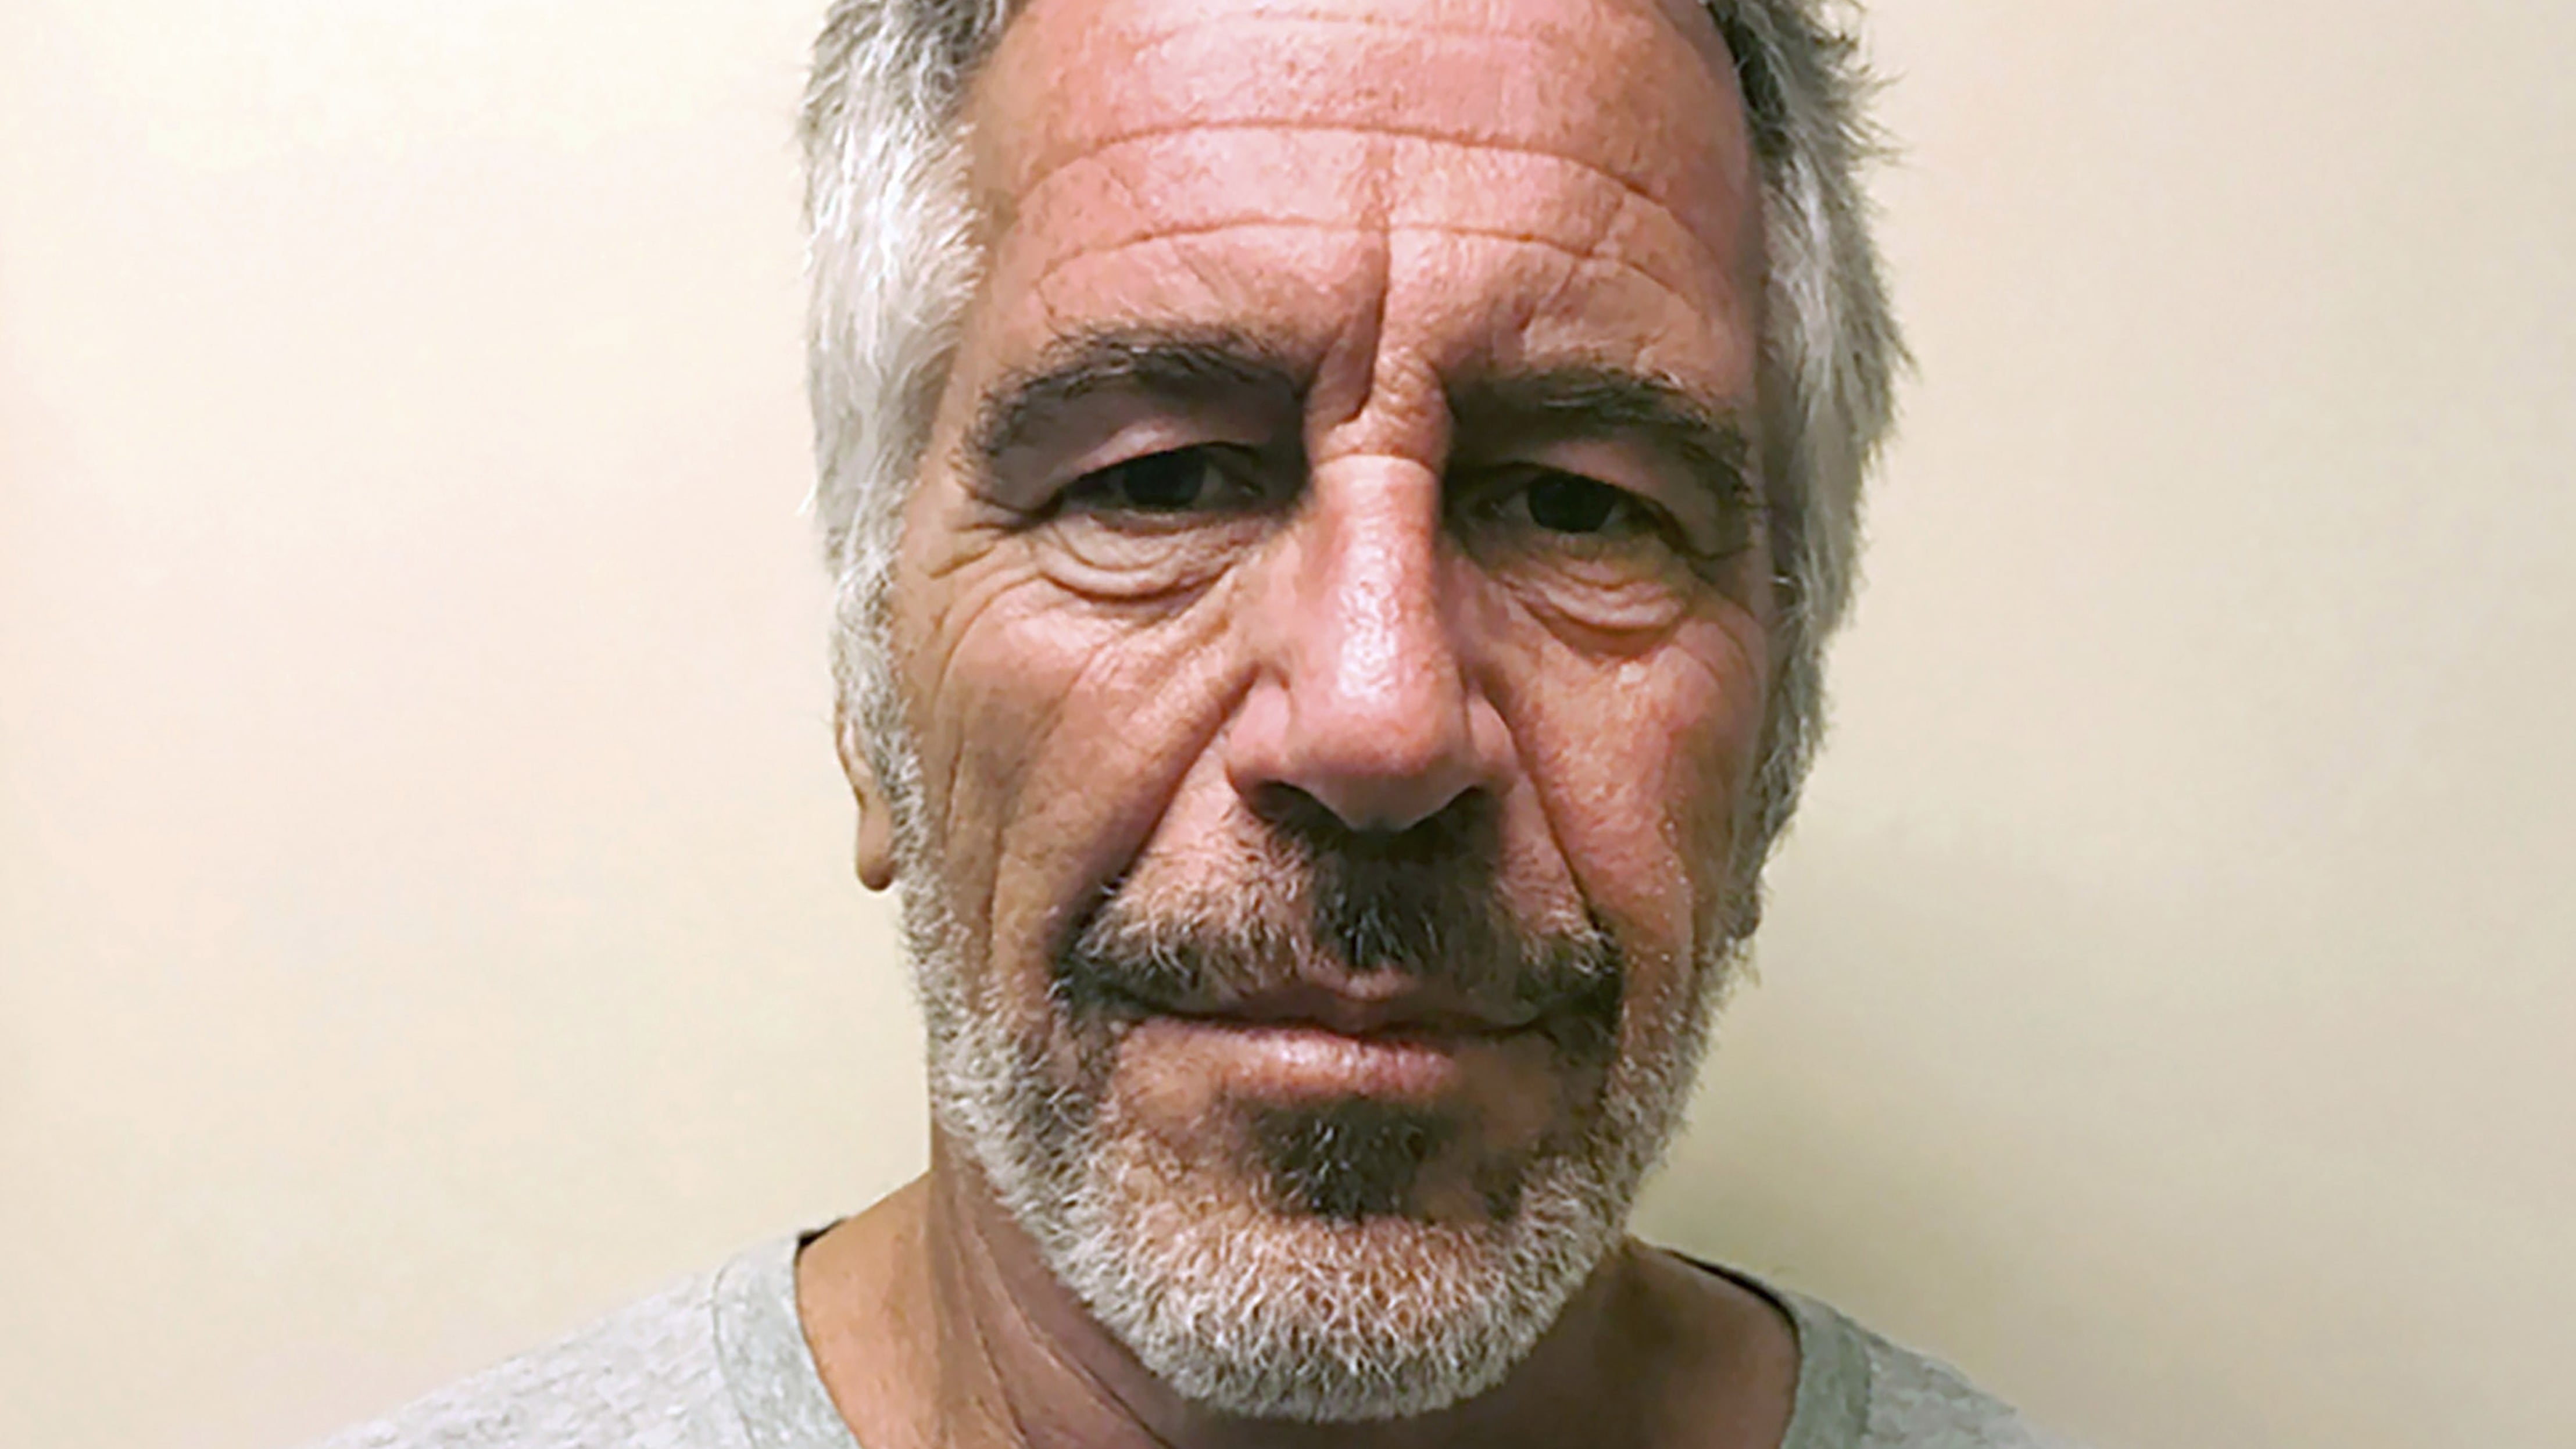 Jeffrey Epstein died aged 66 in 2019 (New York State Sex Offender Registry via AP, File)